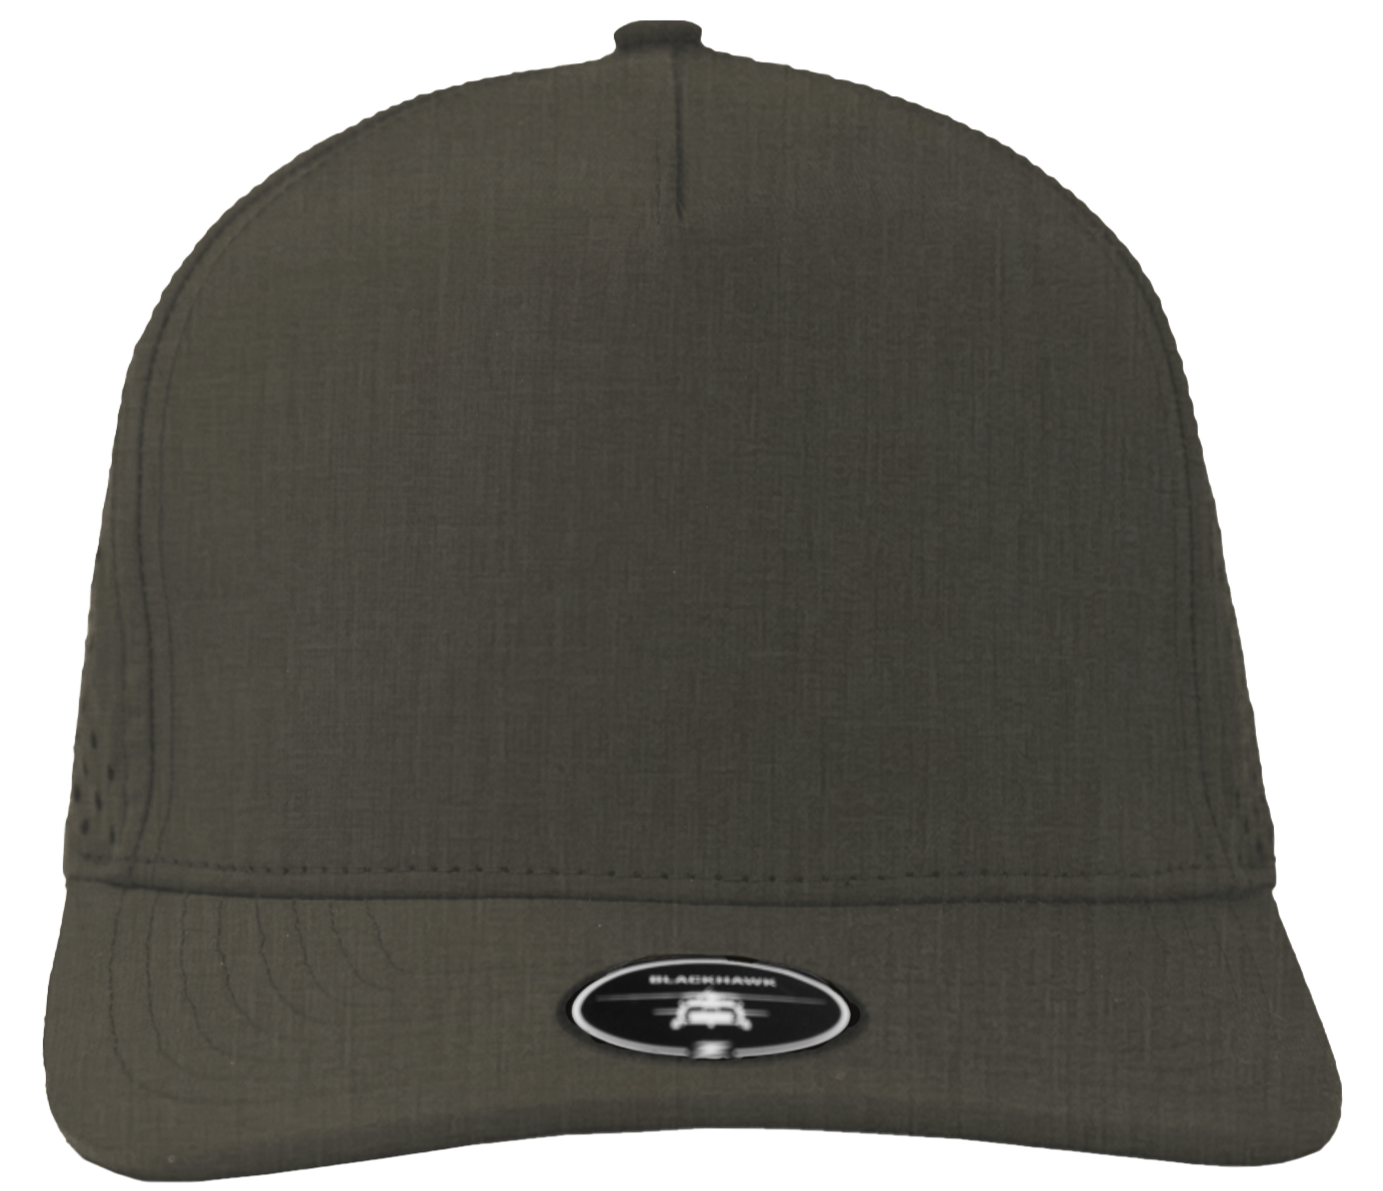 Blackhawk Graphite 5 panel snapback hat